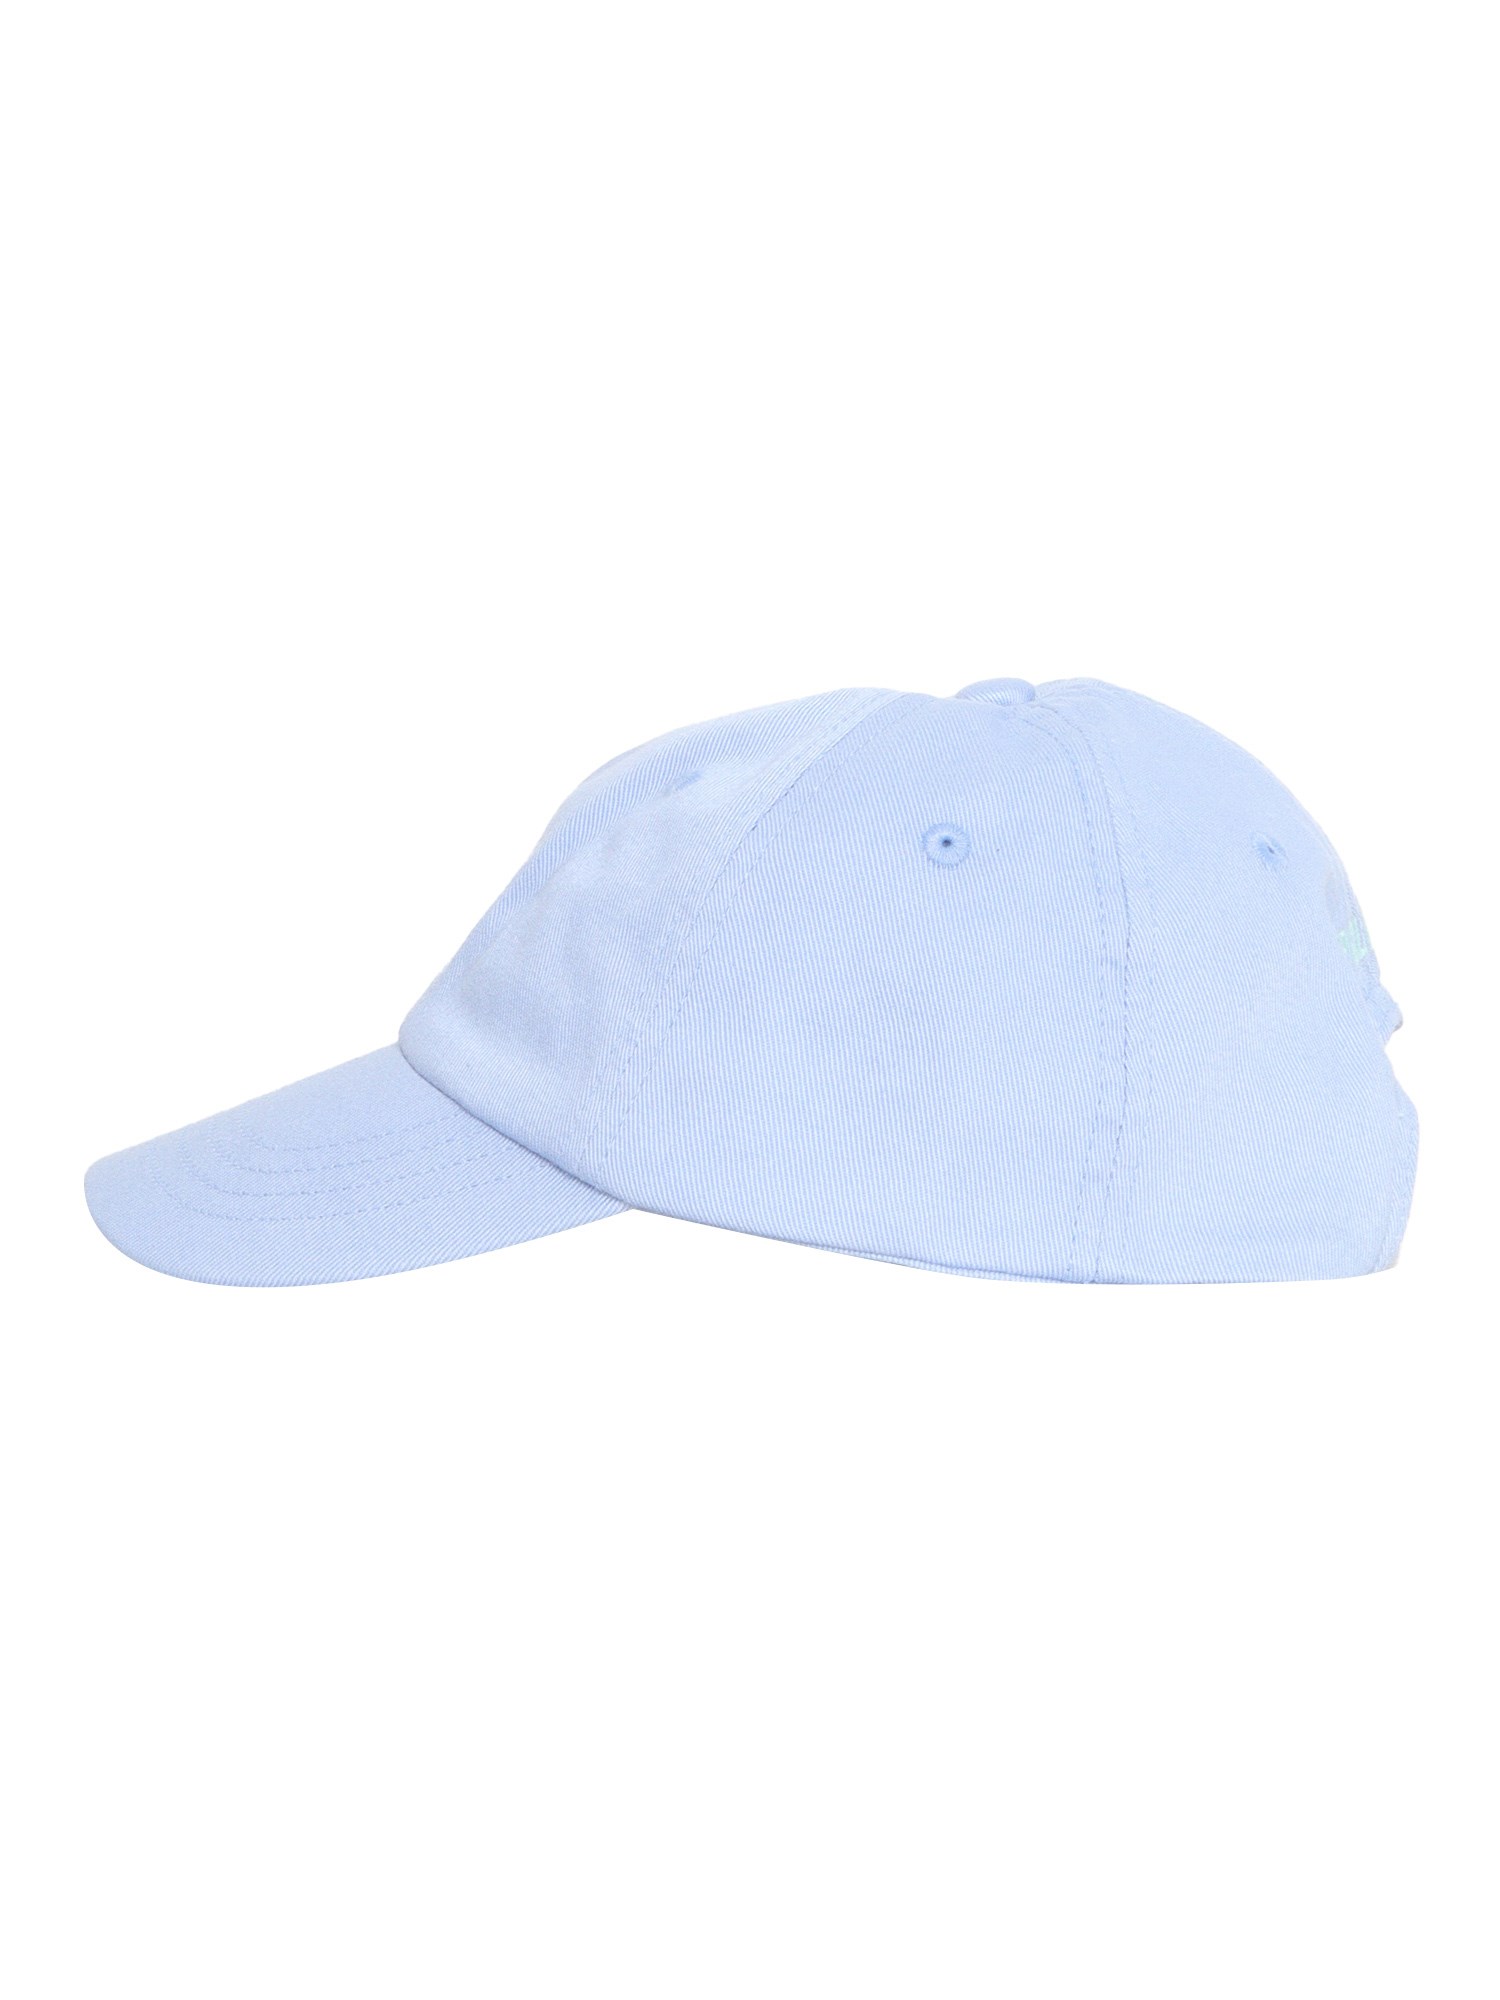 Polo Ralph Lauren Light Blue Baseball Hat